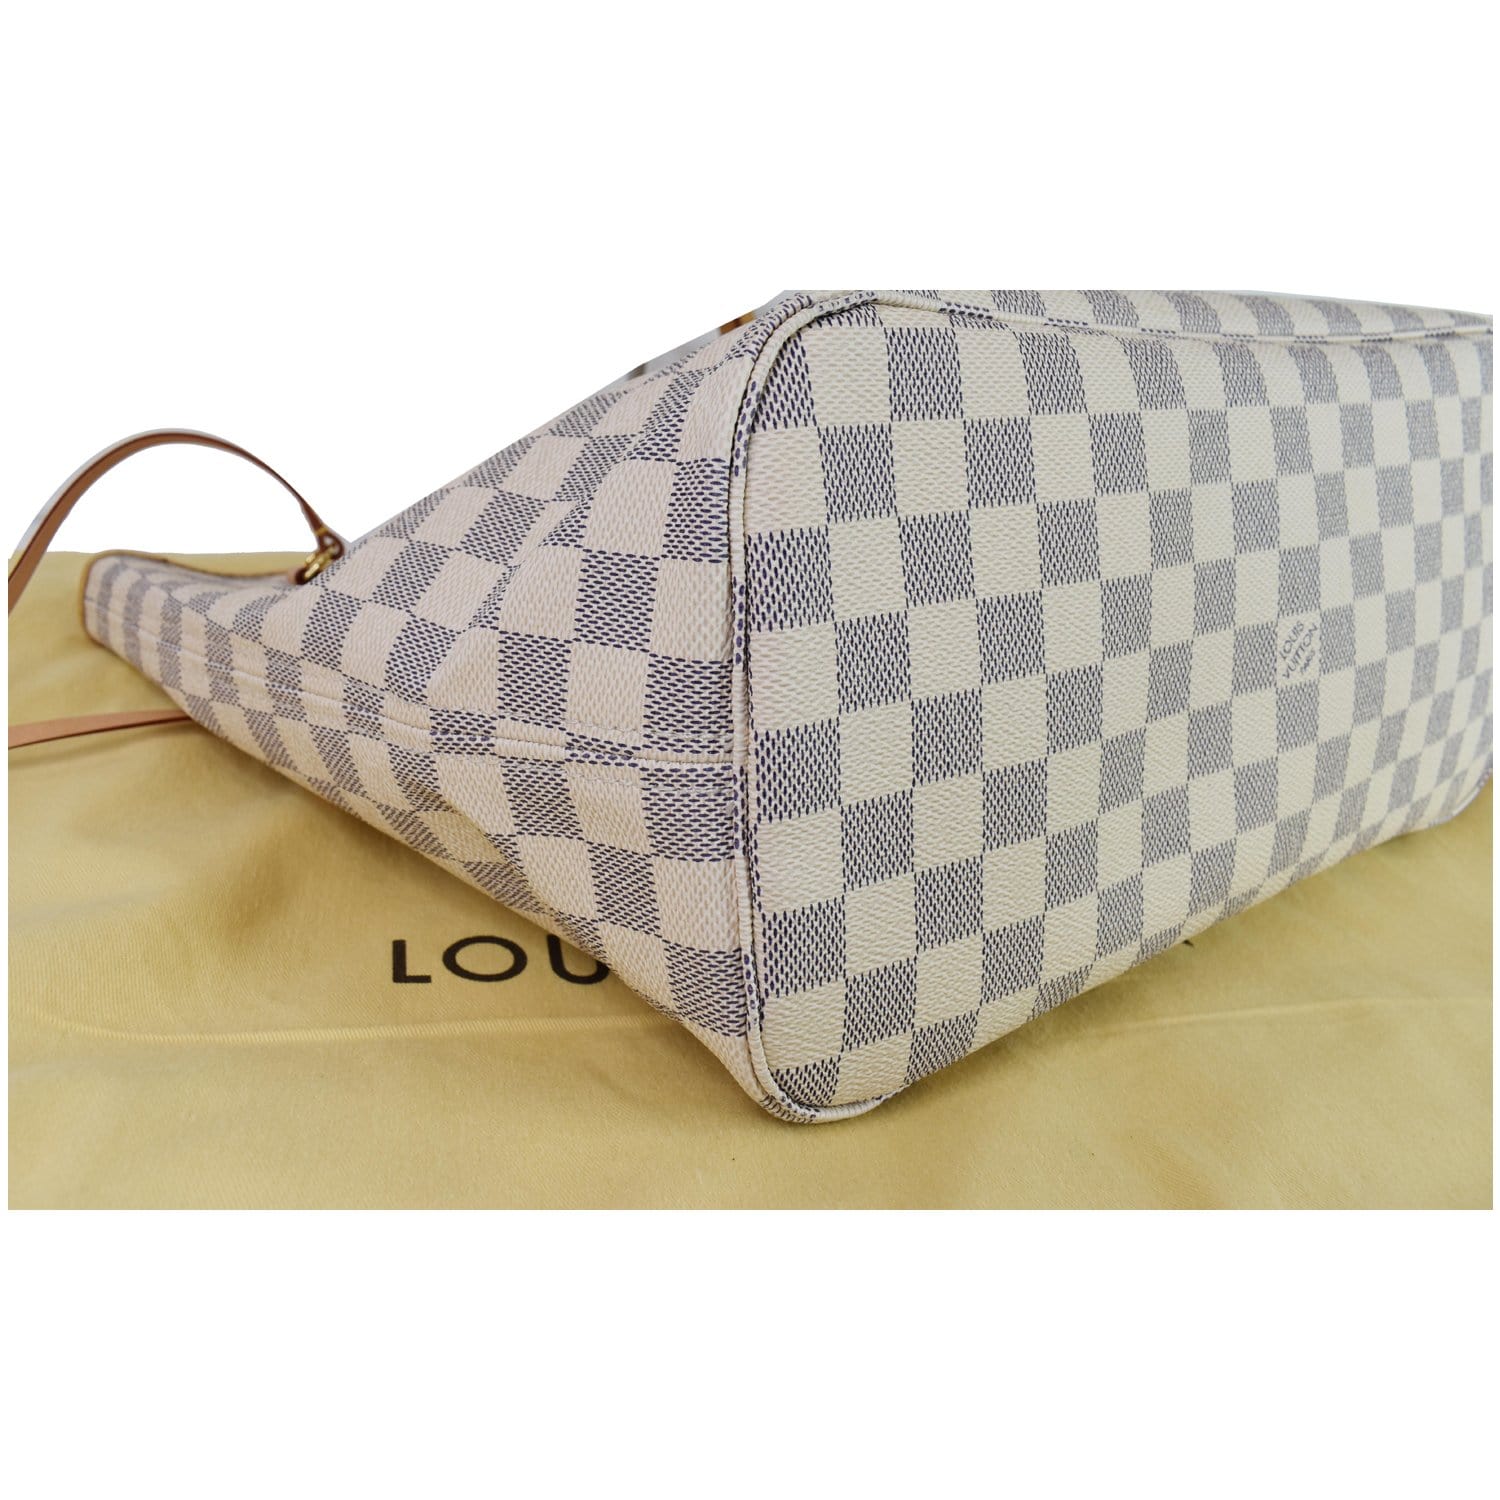 N40471 Louis Vuitton Damier Azur Neverfull MM Tote Bag